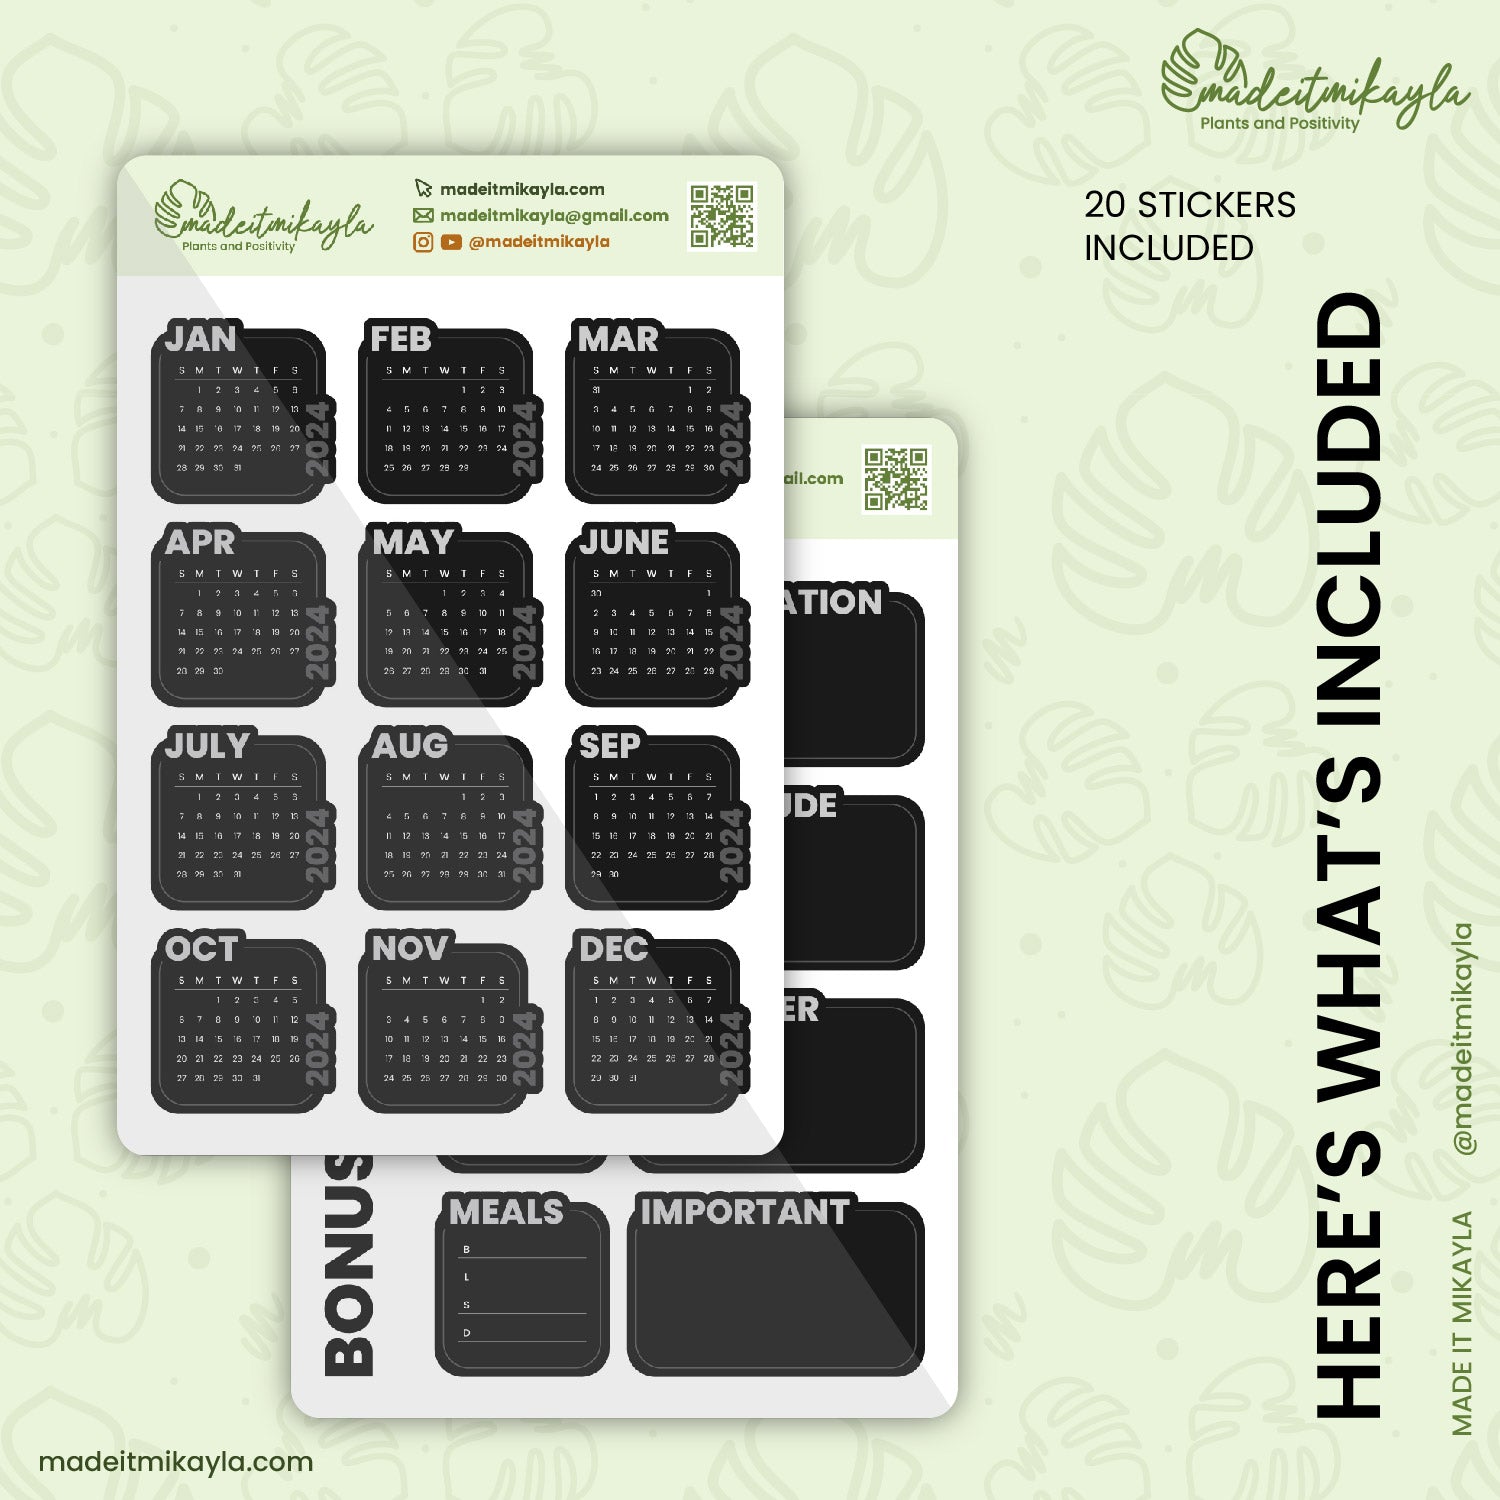 Black 2024 Calendars Digital Stickers | MadeItMikayla